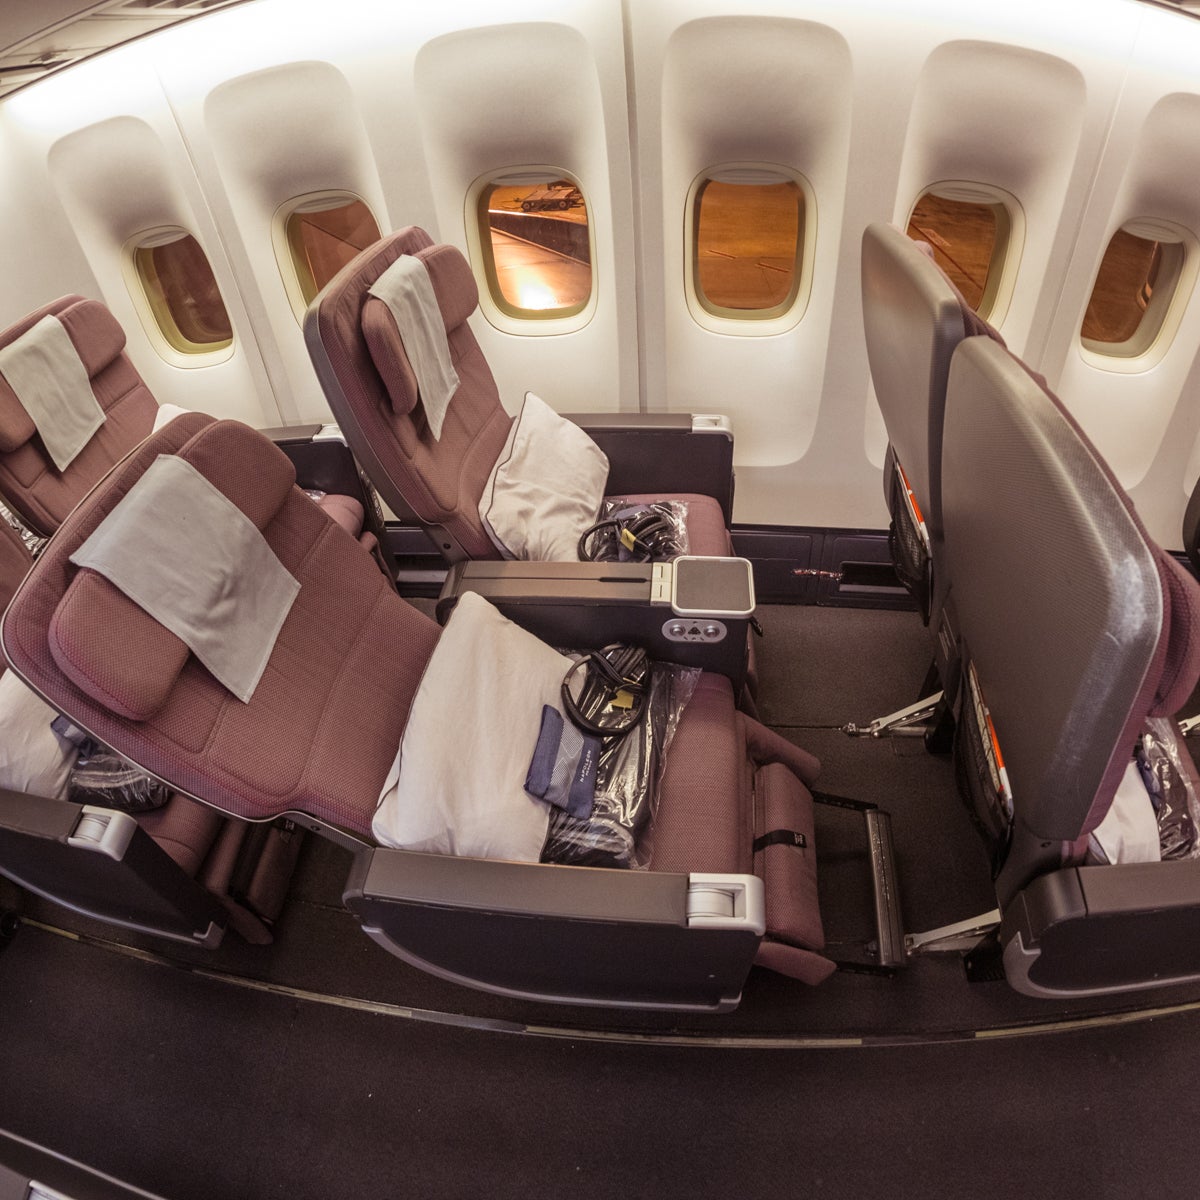 Qantas Boeing 747 Premium Economy Point of View